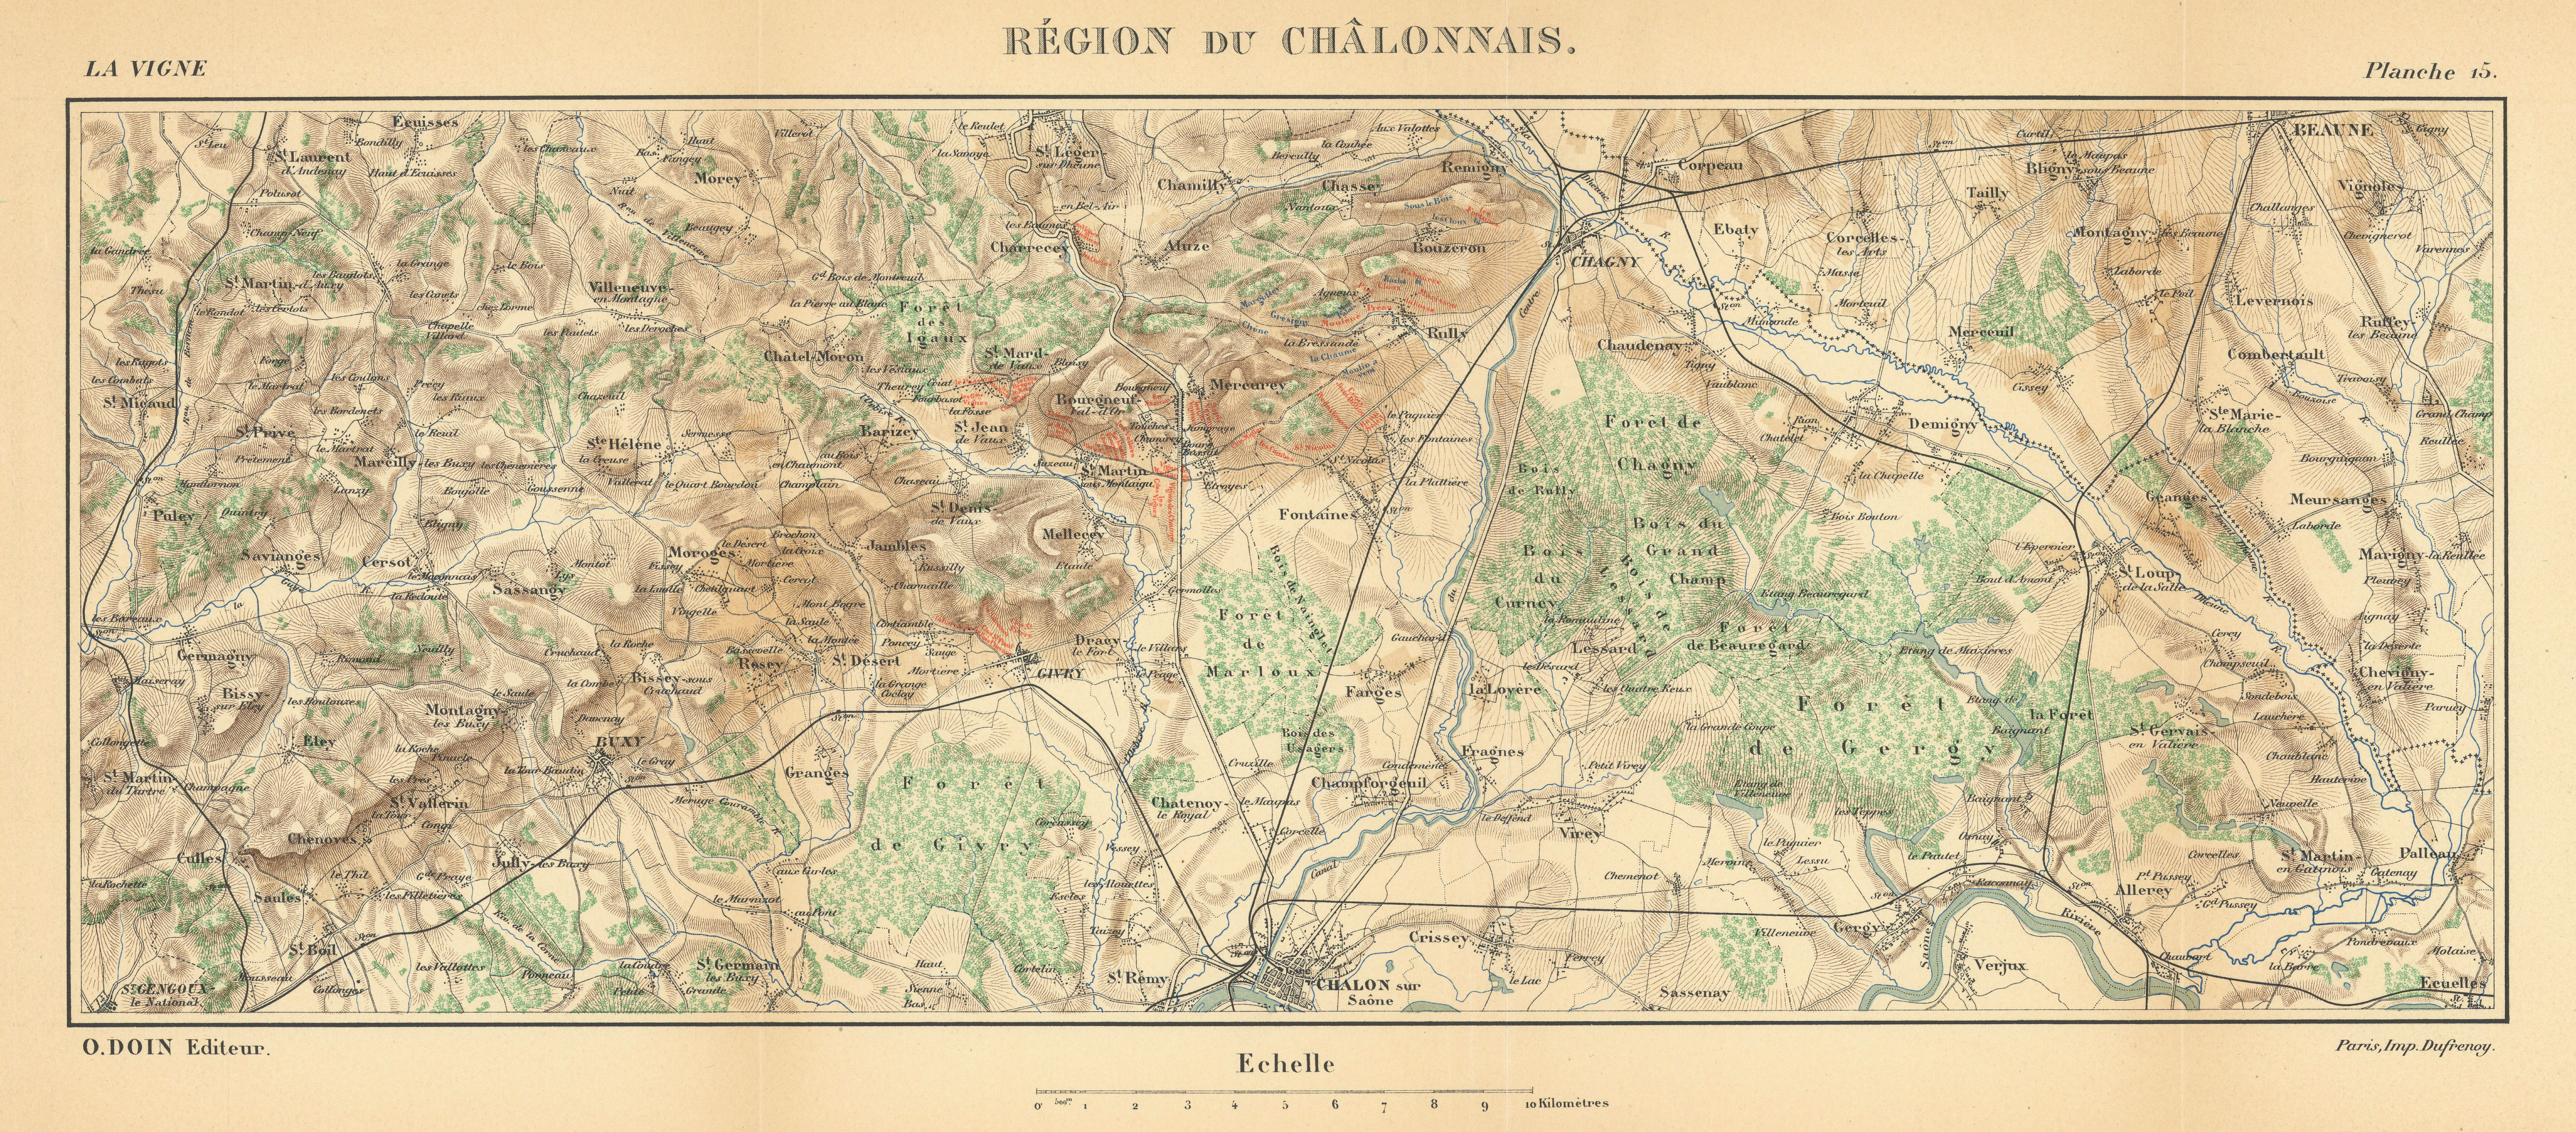 Associate Product Côte Châlonnais. Burgundy wine map. HAUSERMANN 1901 old antique plan chart